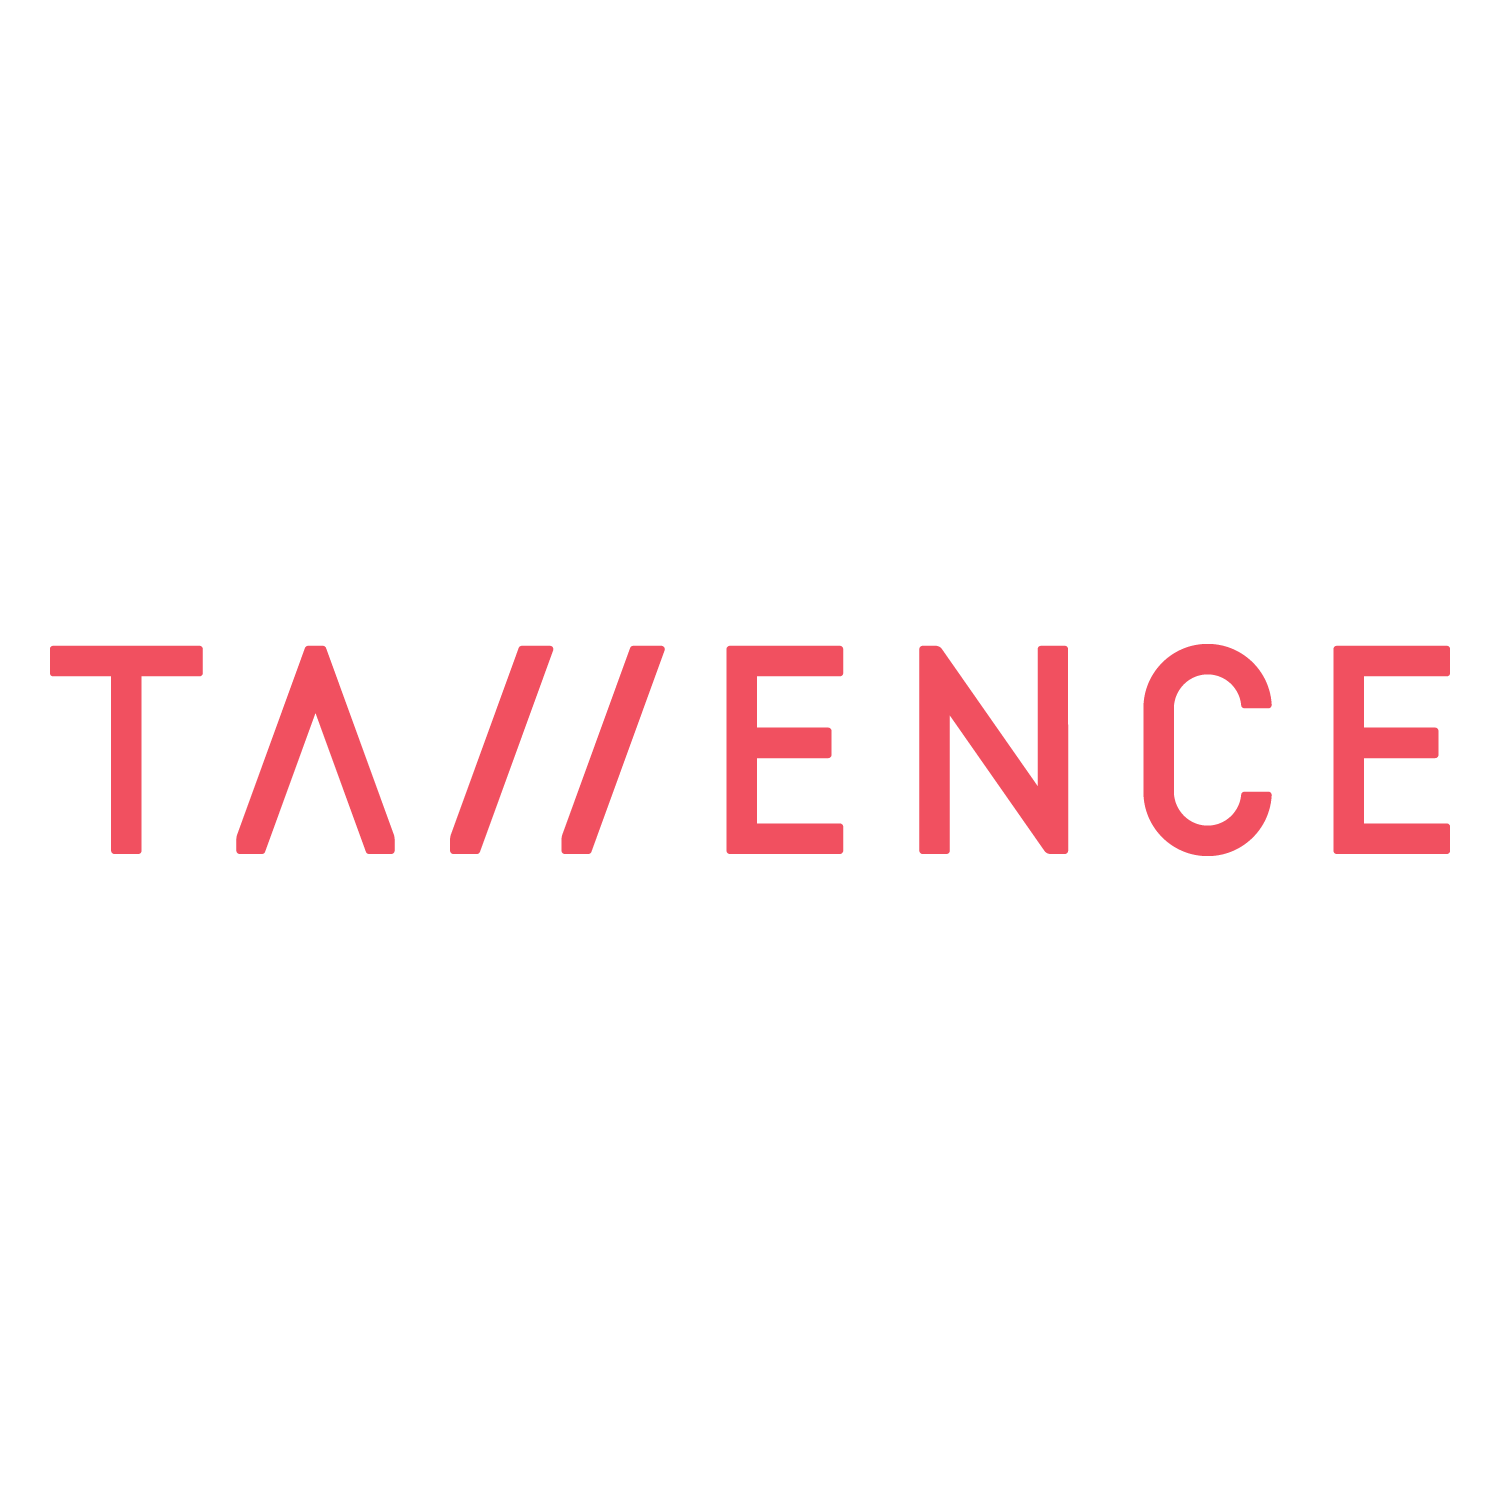 Tallence logo